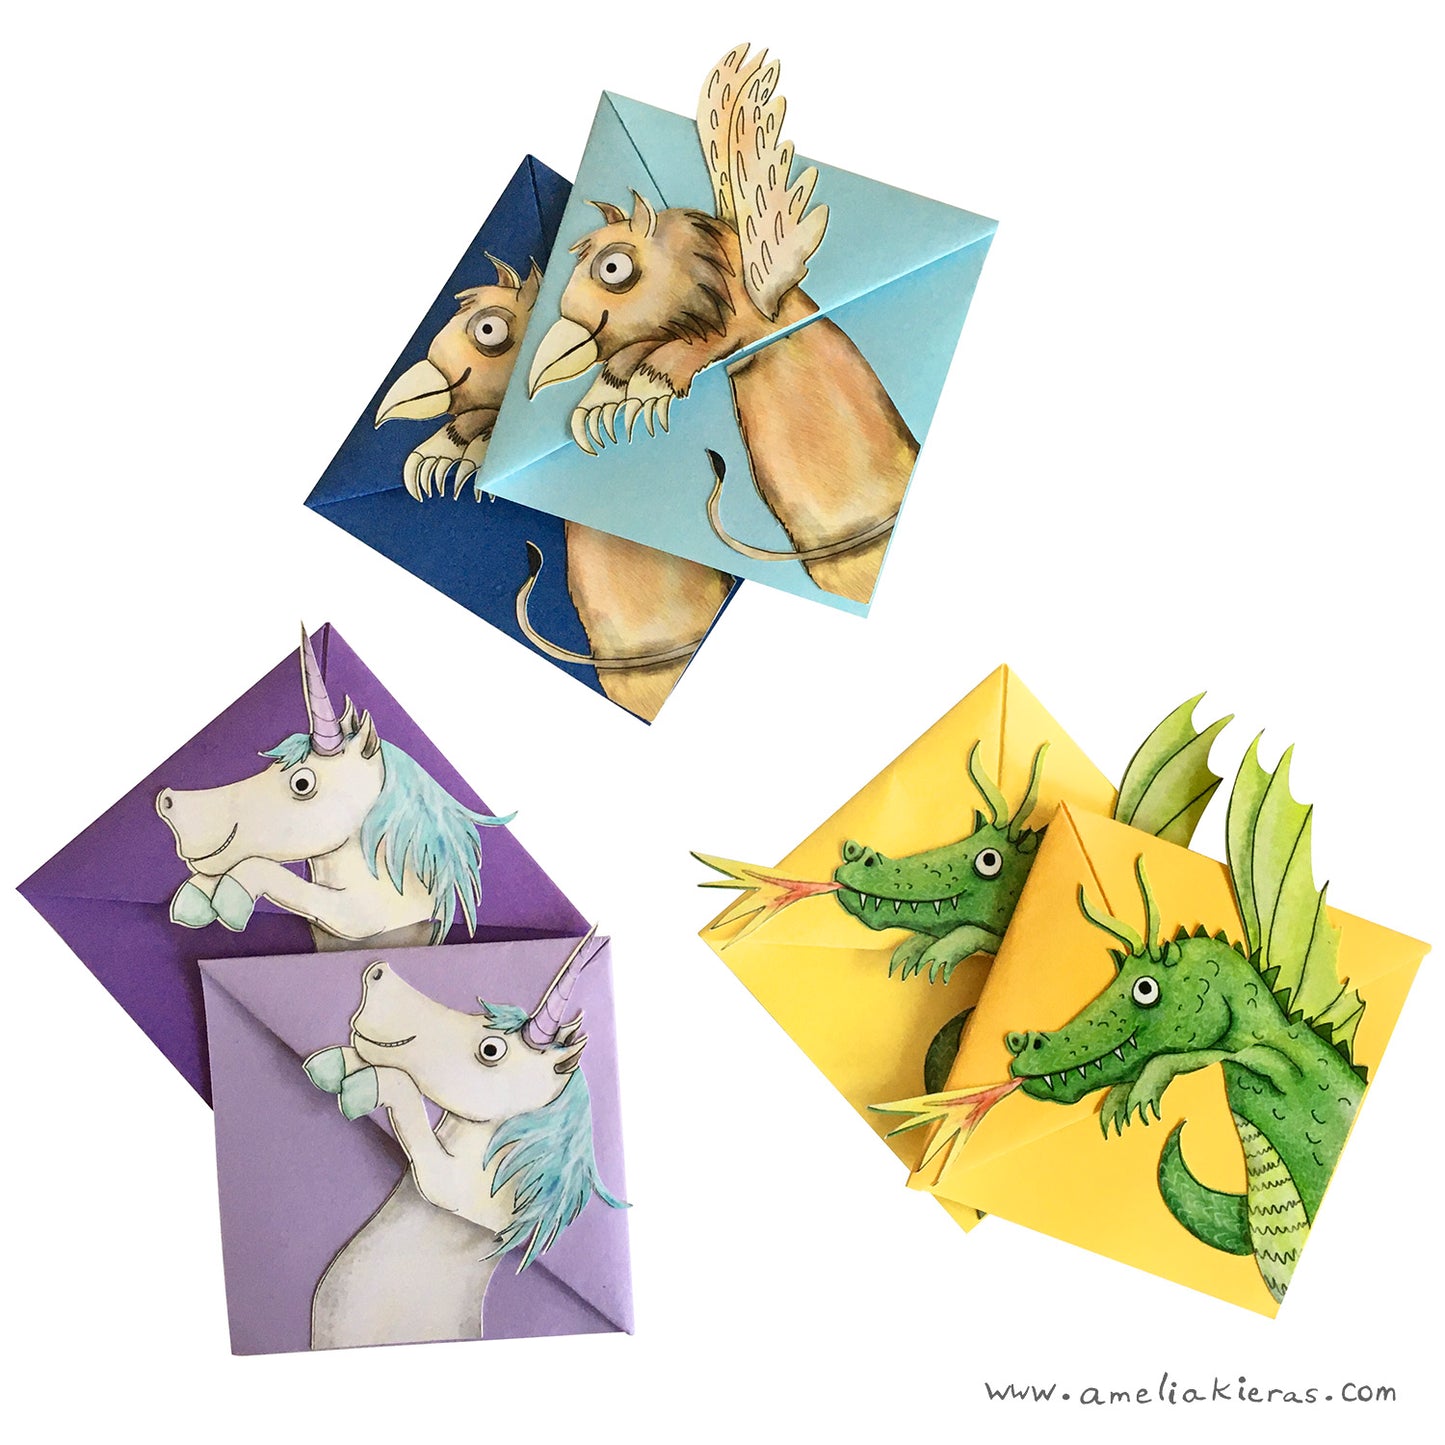 Origami Corner Bookmarks with Illustrated Fantasy Creatures, Set of Three